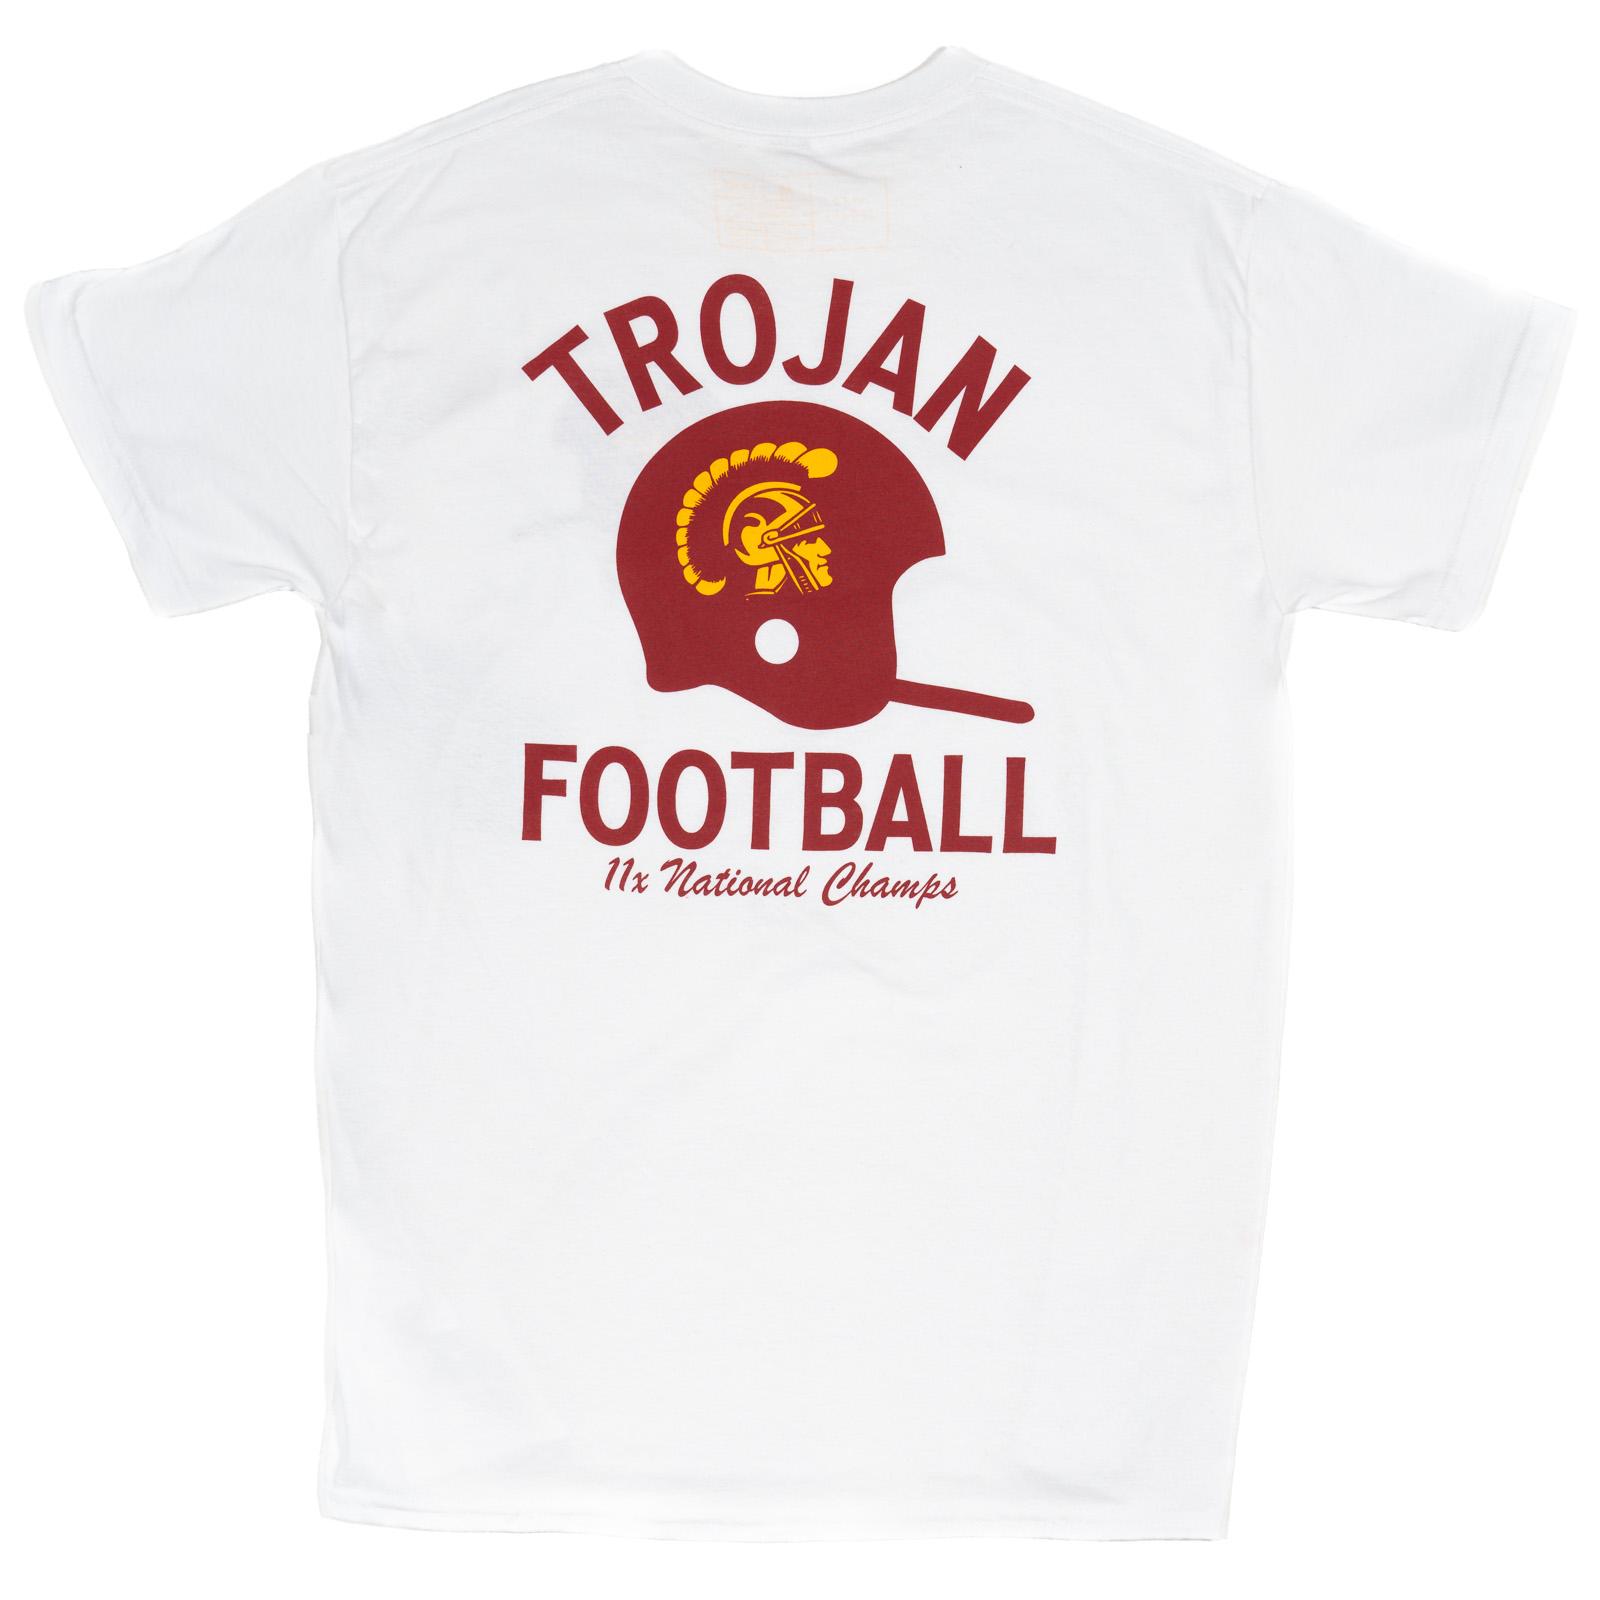 USC Trojan Football Helmet 11 National Champs SS Tee White image01